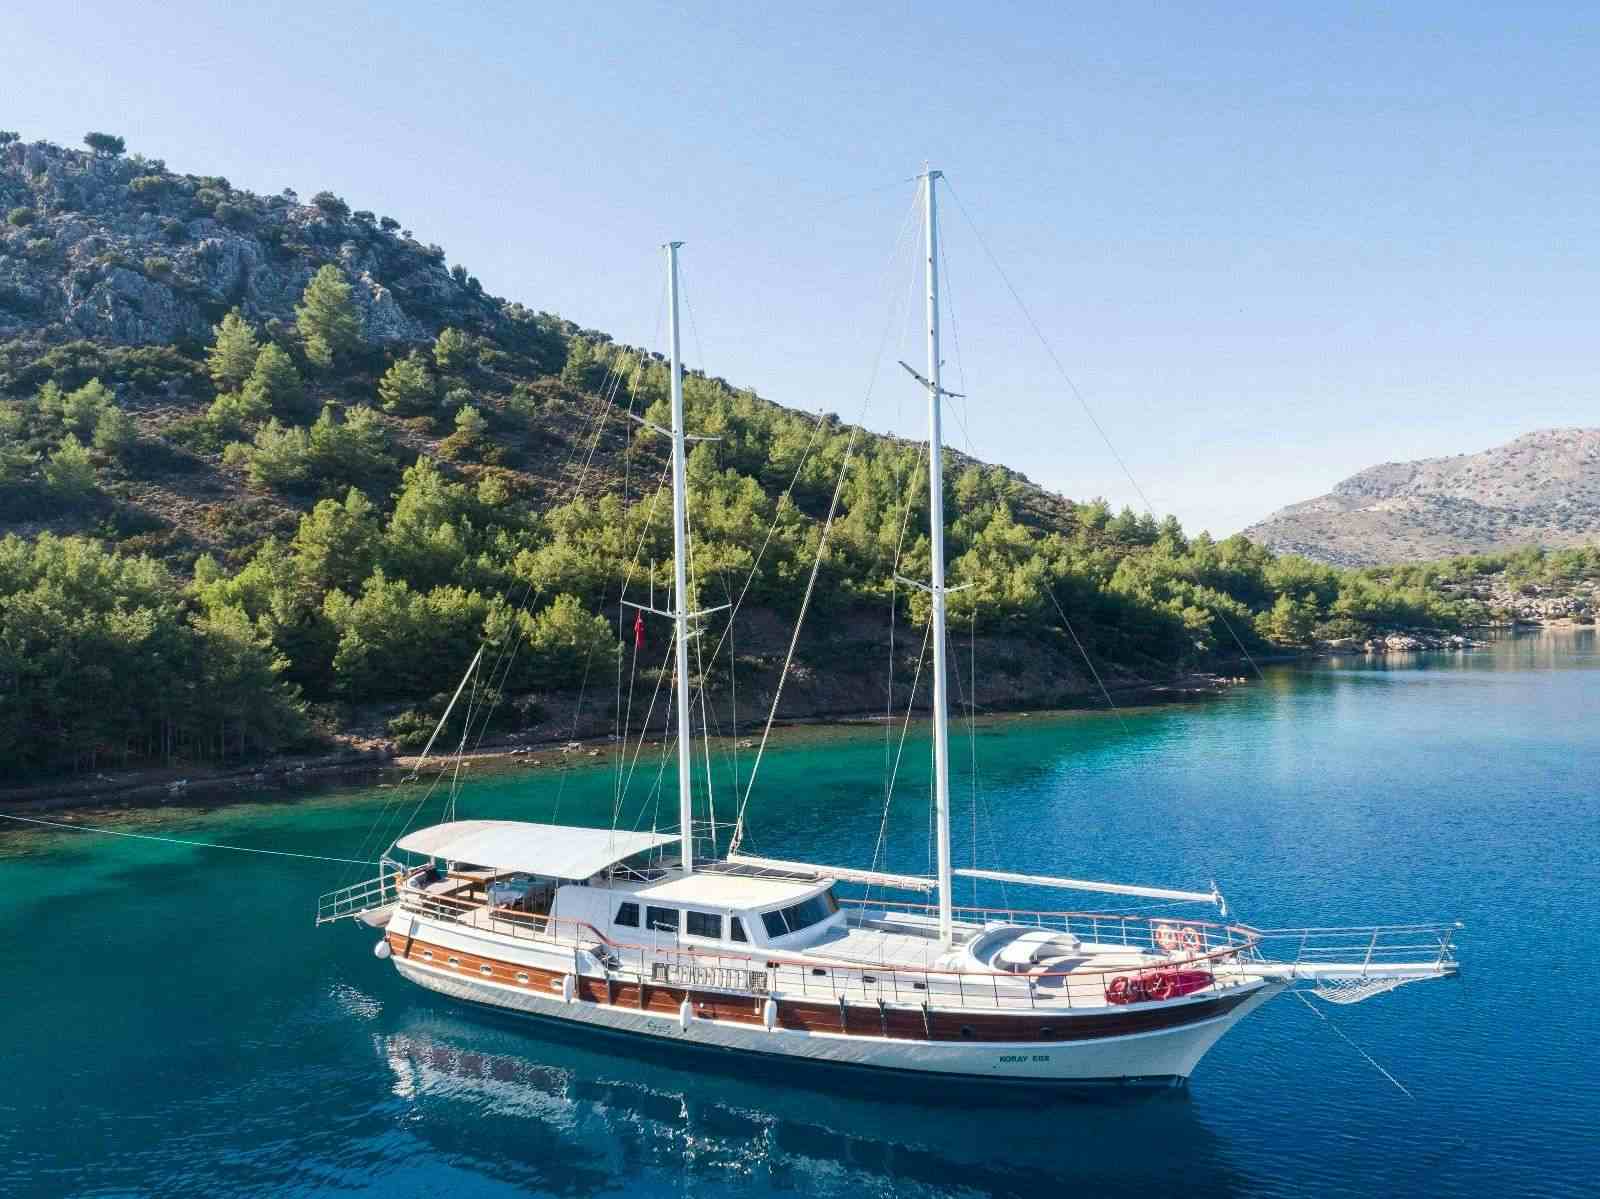 koray ege - Yacht Charter Marina di Montenero di Bisaccia & Boat hire in Greece & Turkey 1